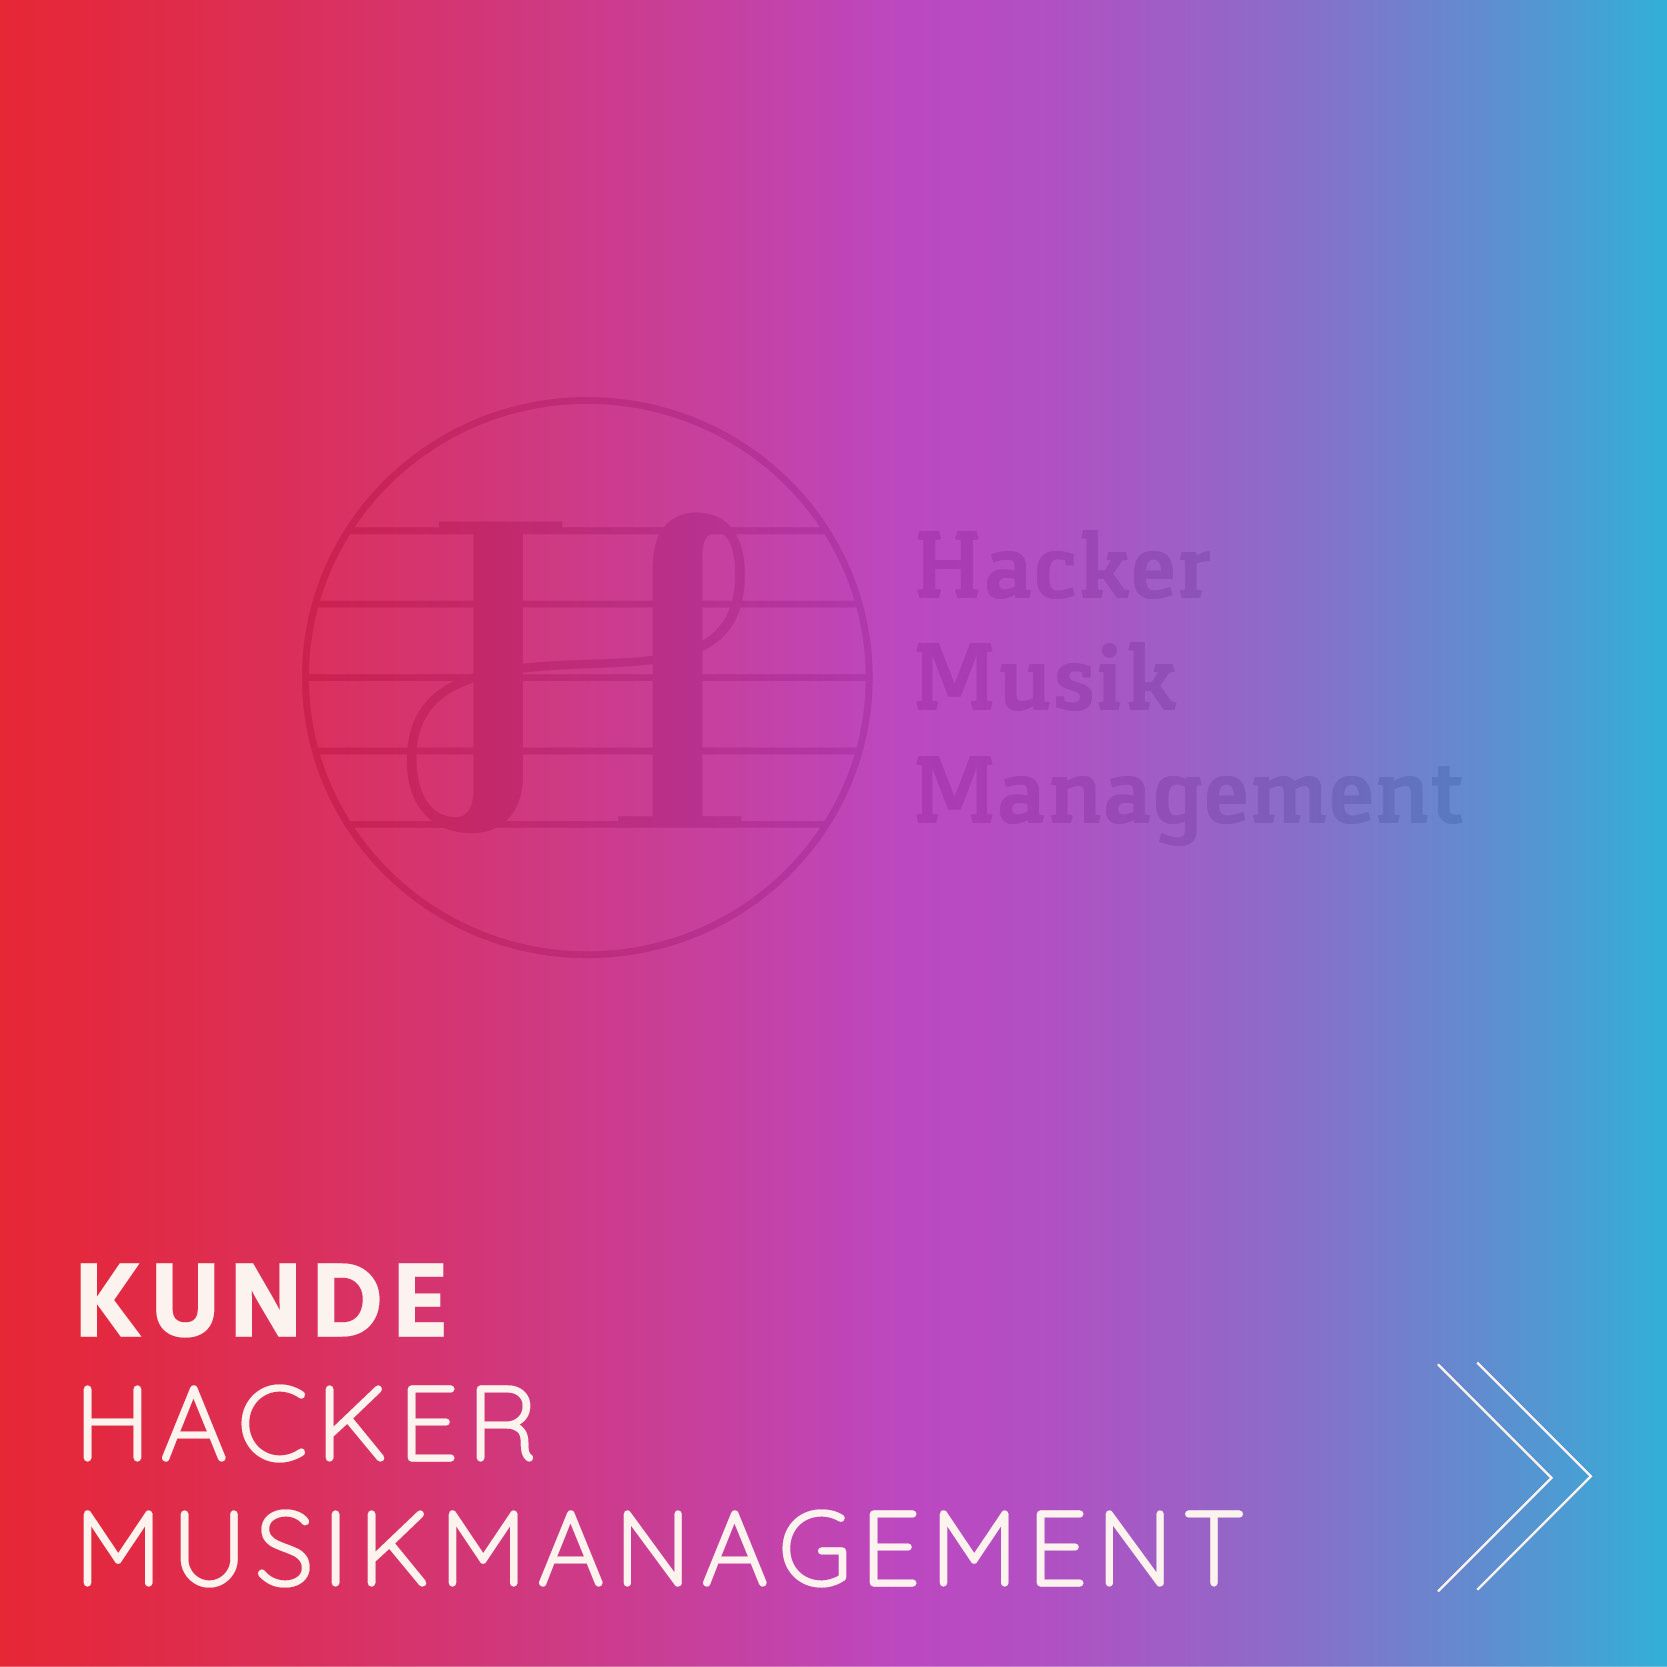 Hacker Musik Management